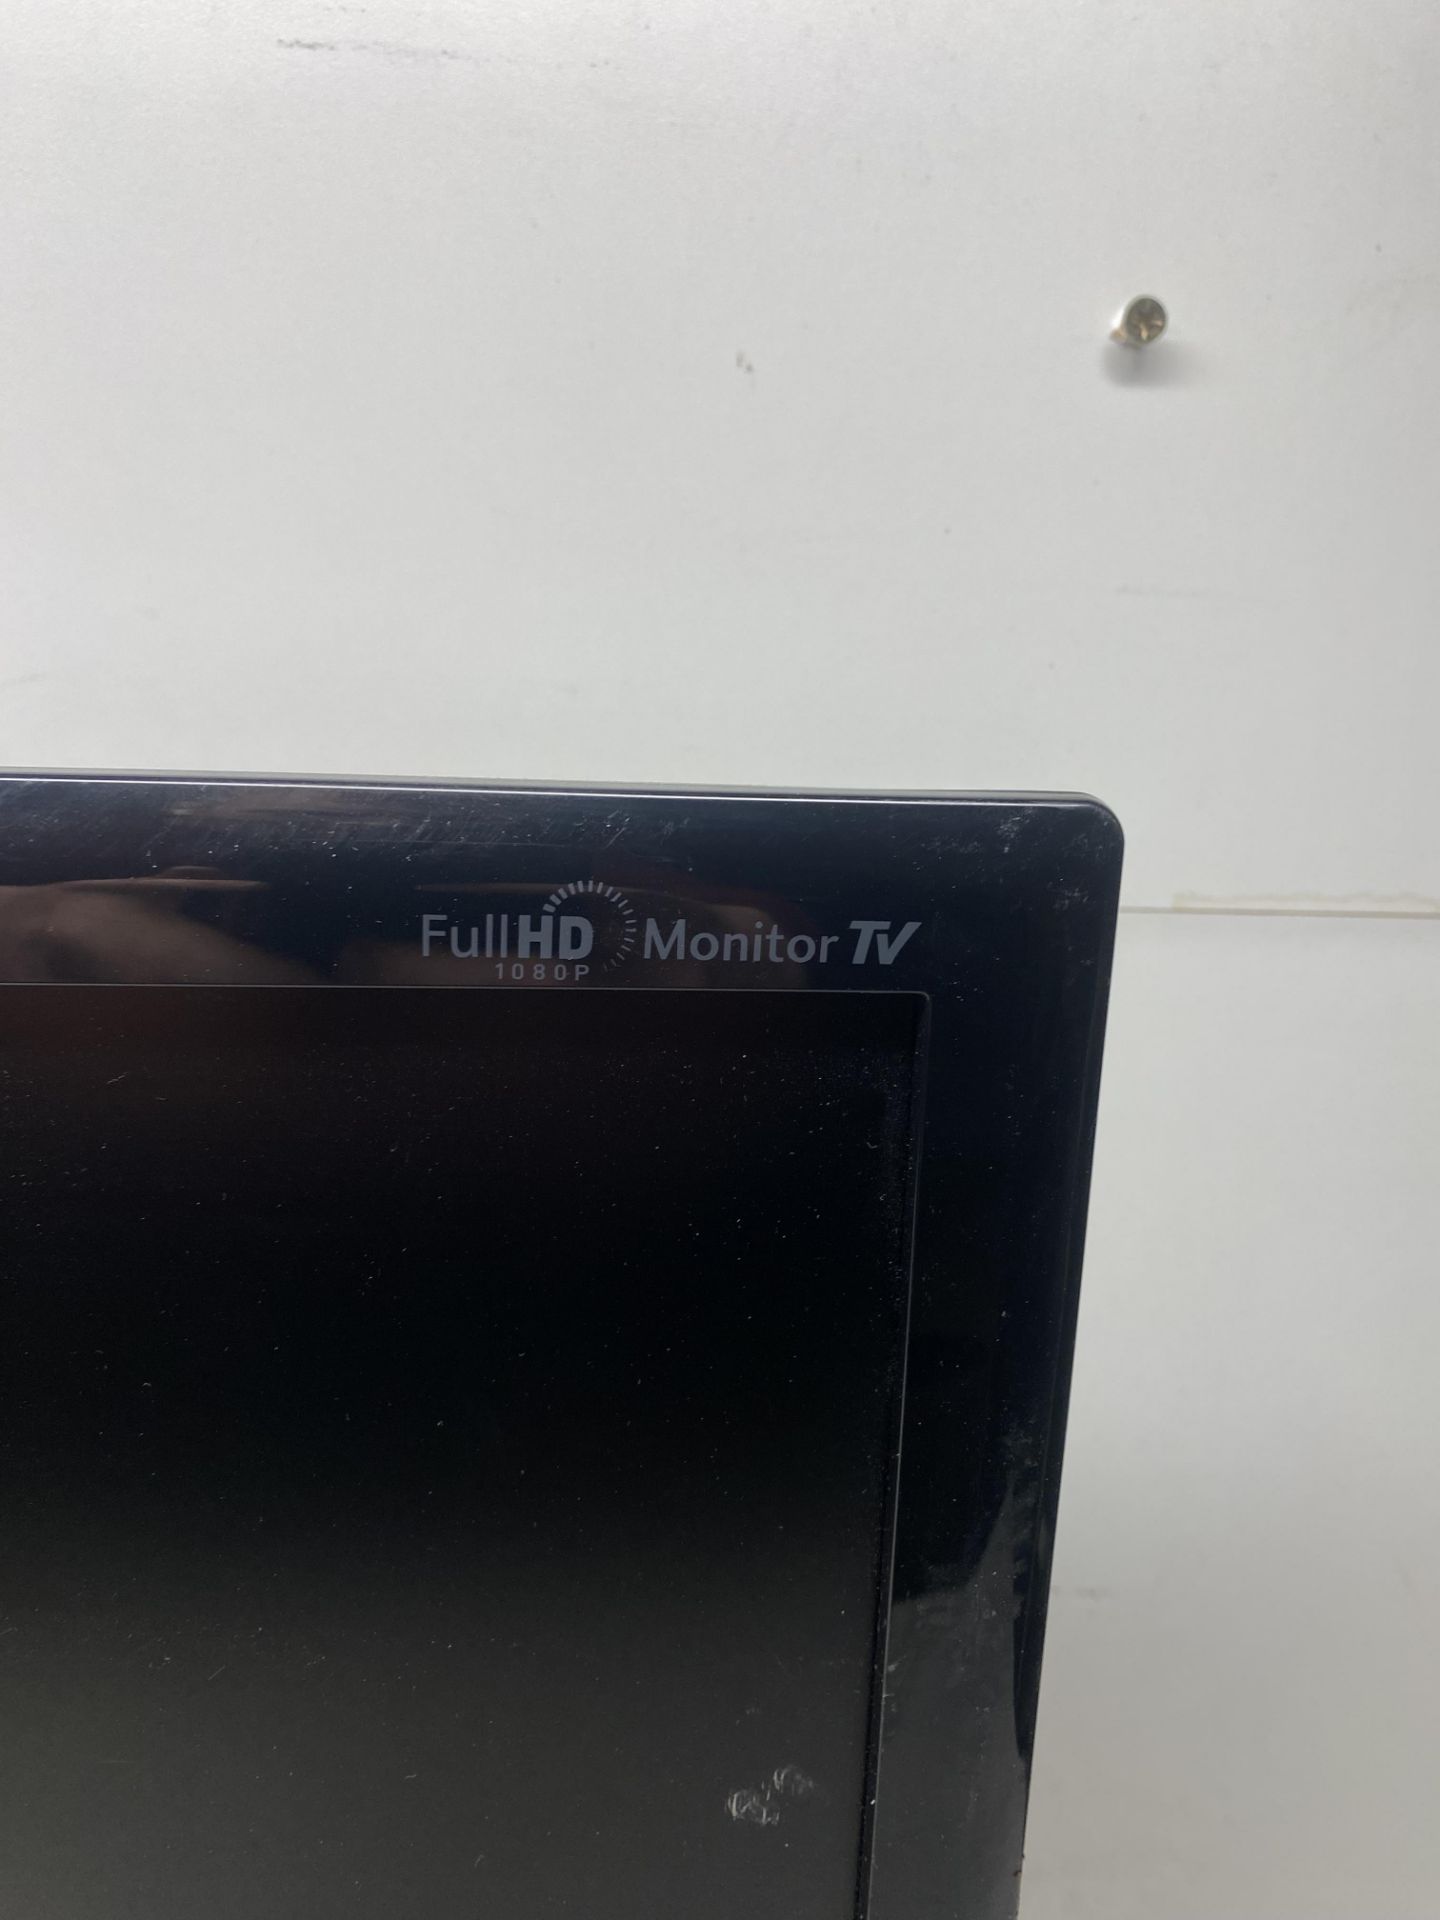 LG M2762DPM 27" Full HD LCD Monitor TV - Image 3 of 8